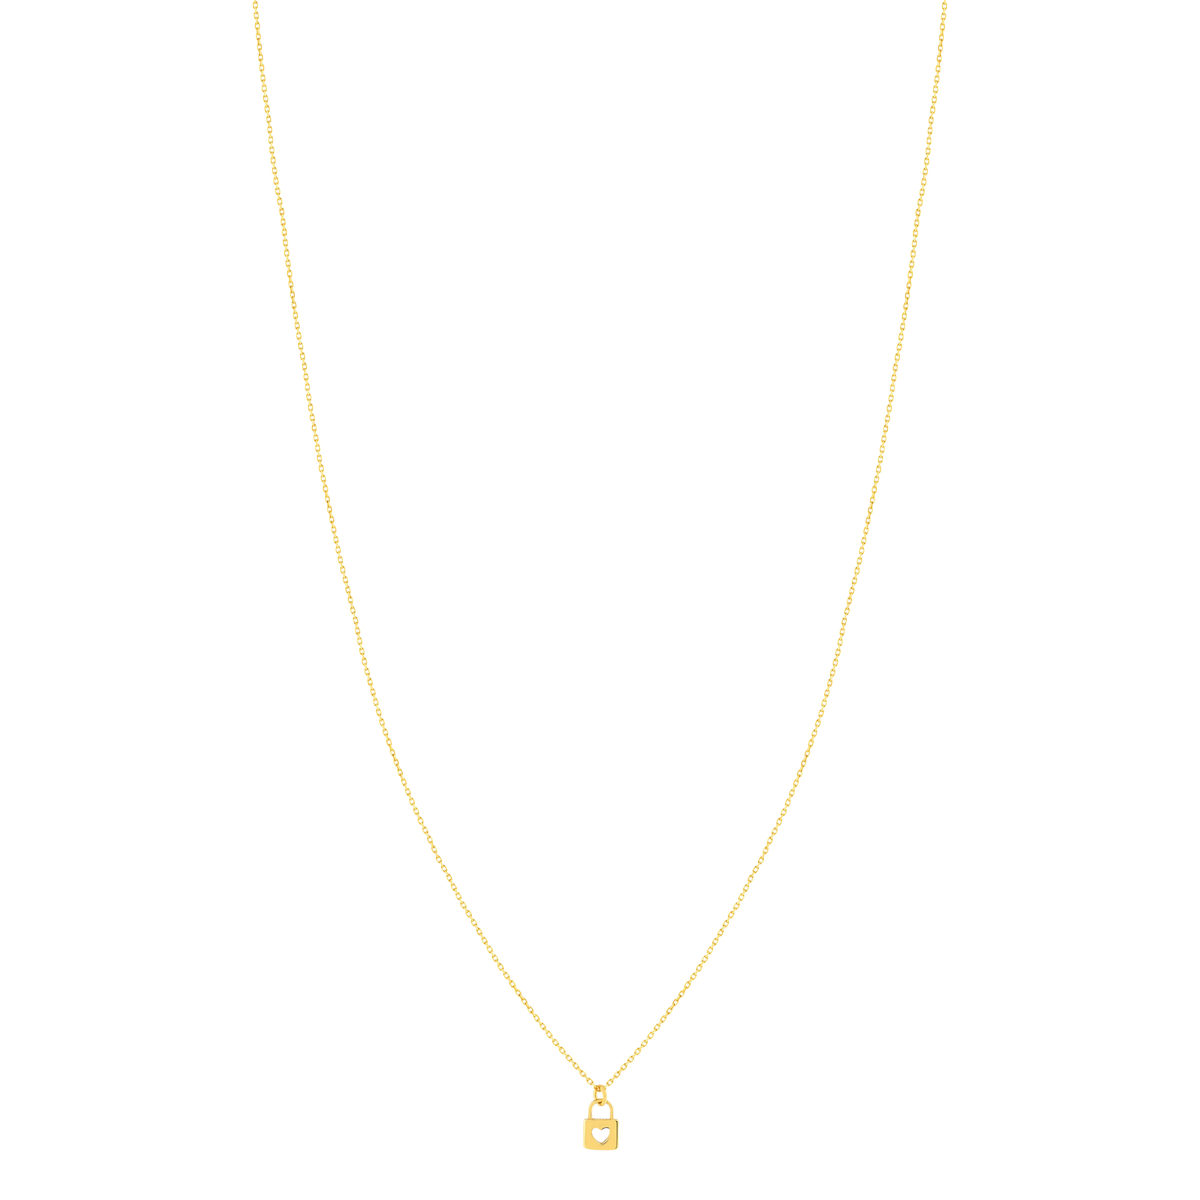 Collier or 375 jaune, motif cadenas avec coeur 45 cm - vue 2